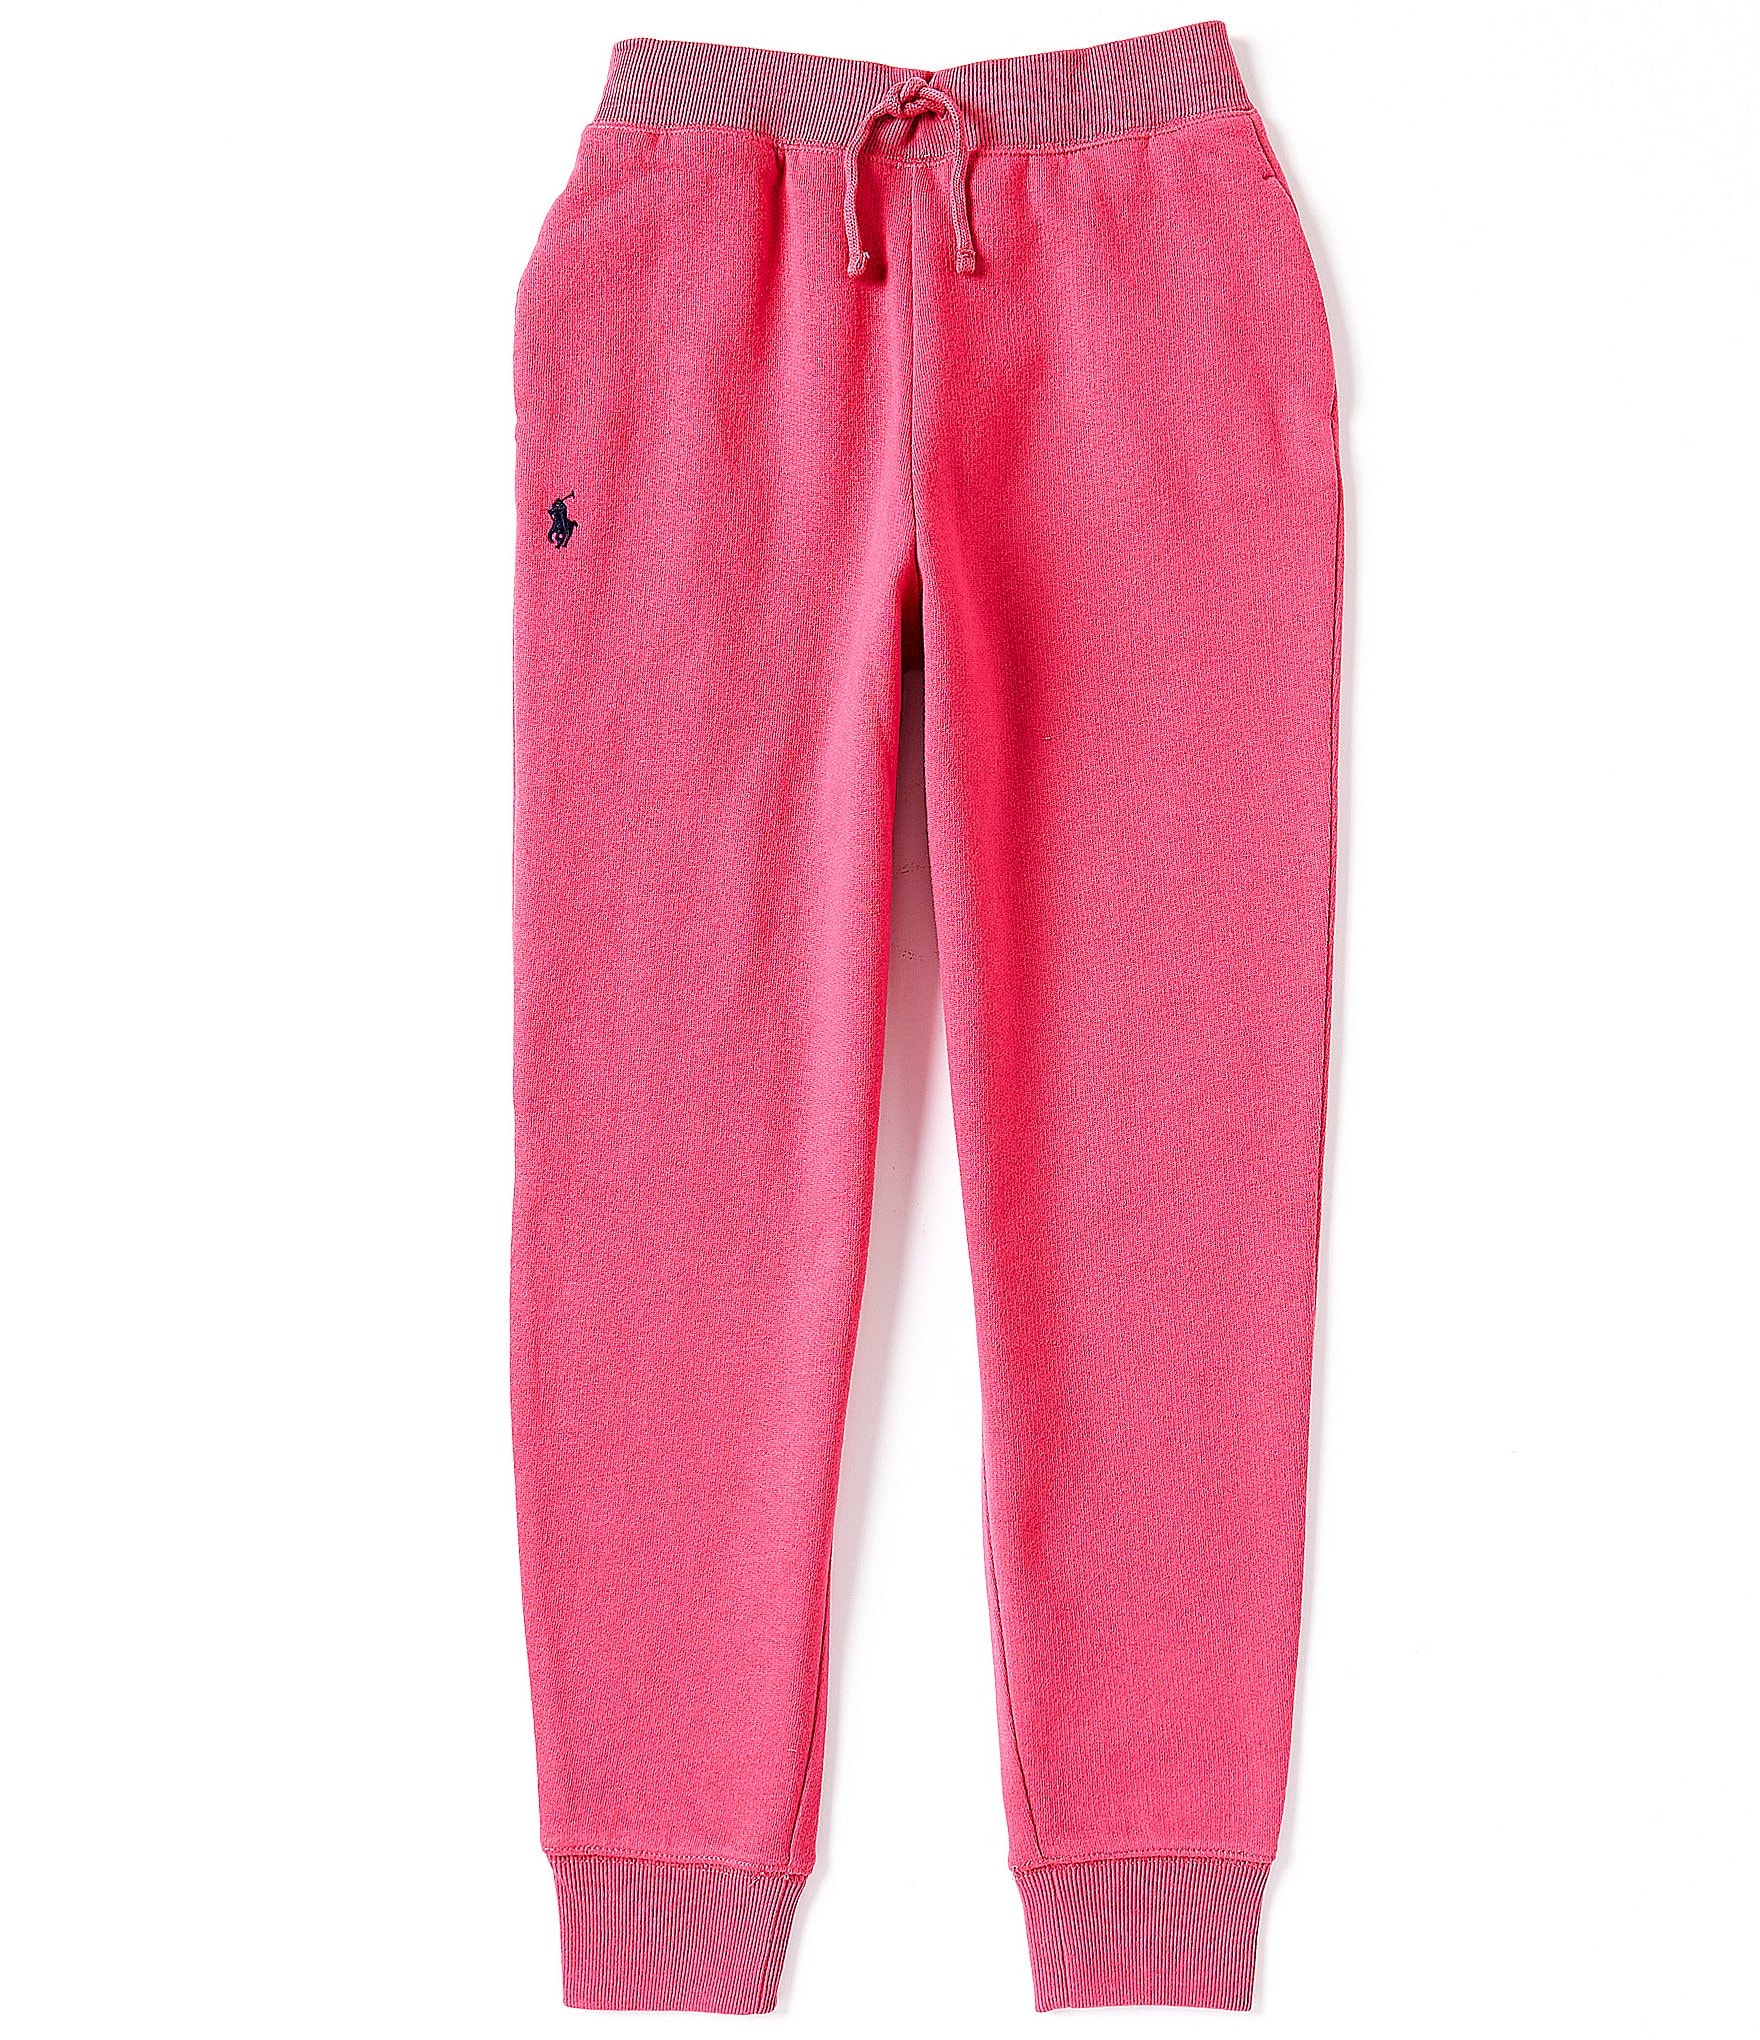 NWT Polo Ralph Lauren Sweatshirt & Jogger Set - Girls Size 14/16